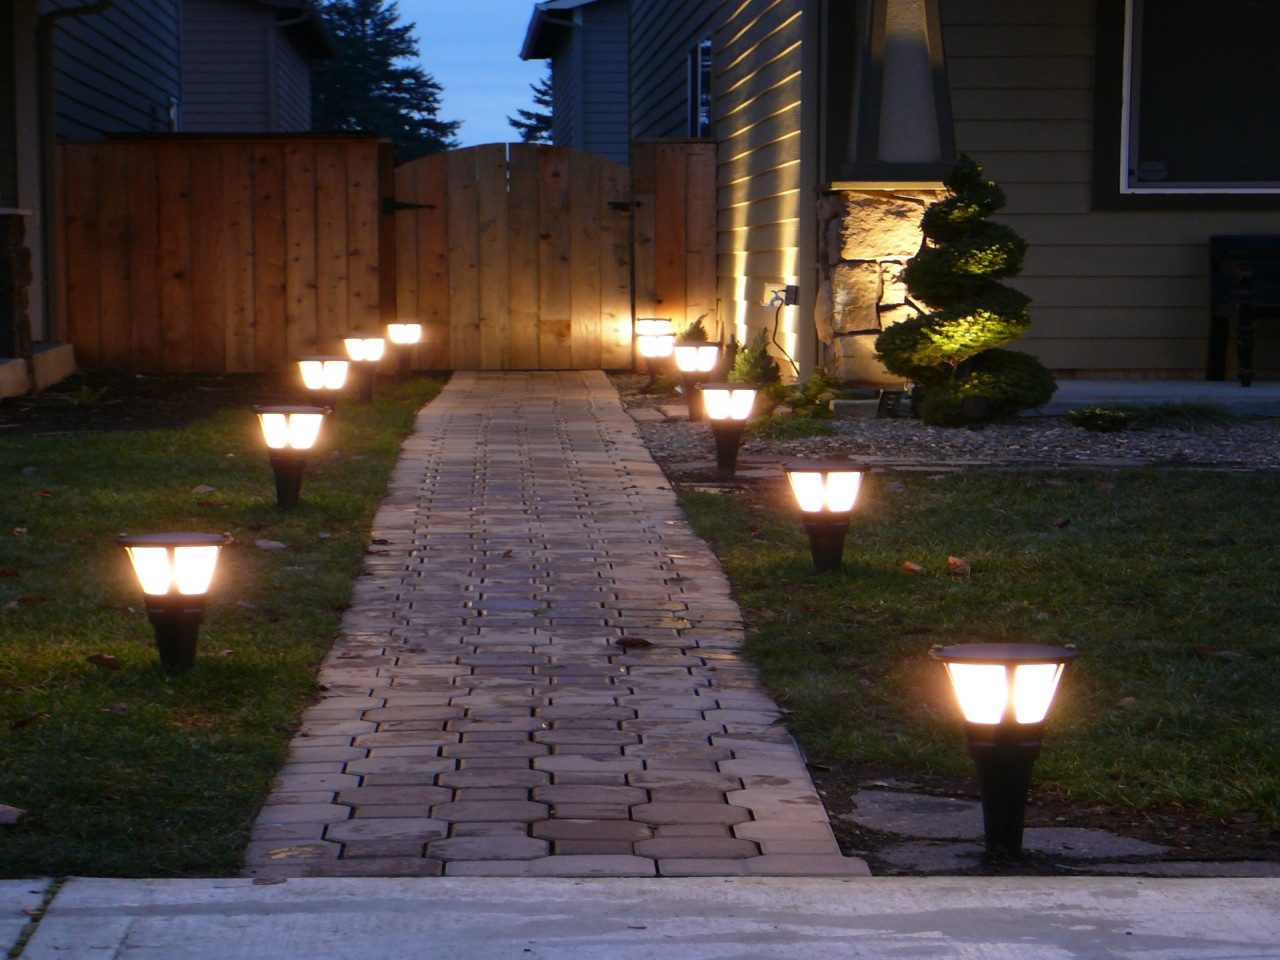 Best ideas about Best Landscape Lighting
. Save or Pin Best solar landscape lights outdoor accent lighting ideas Now.